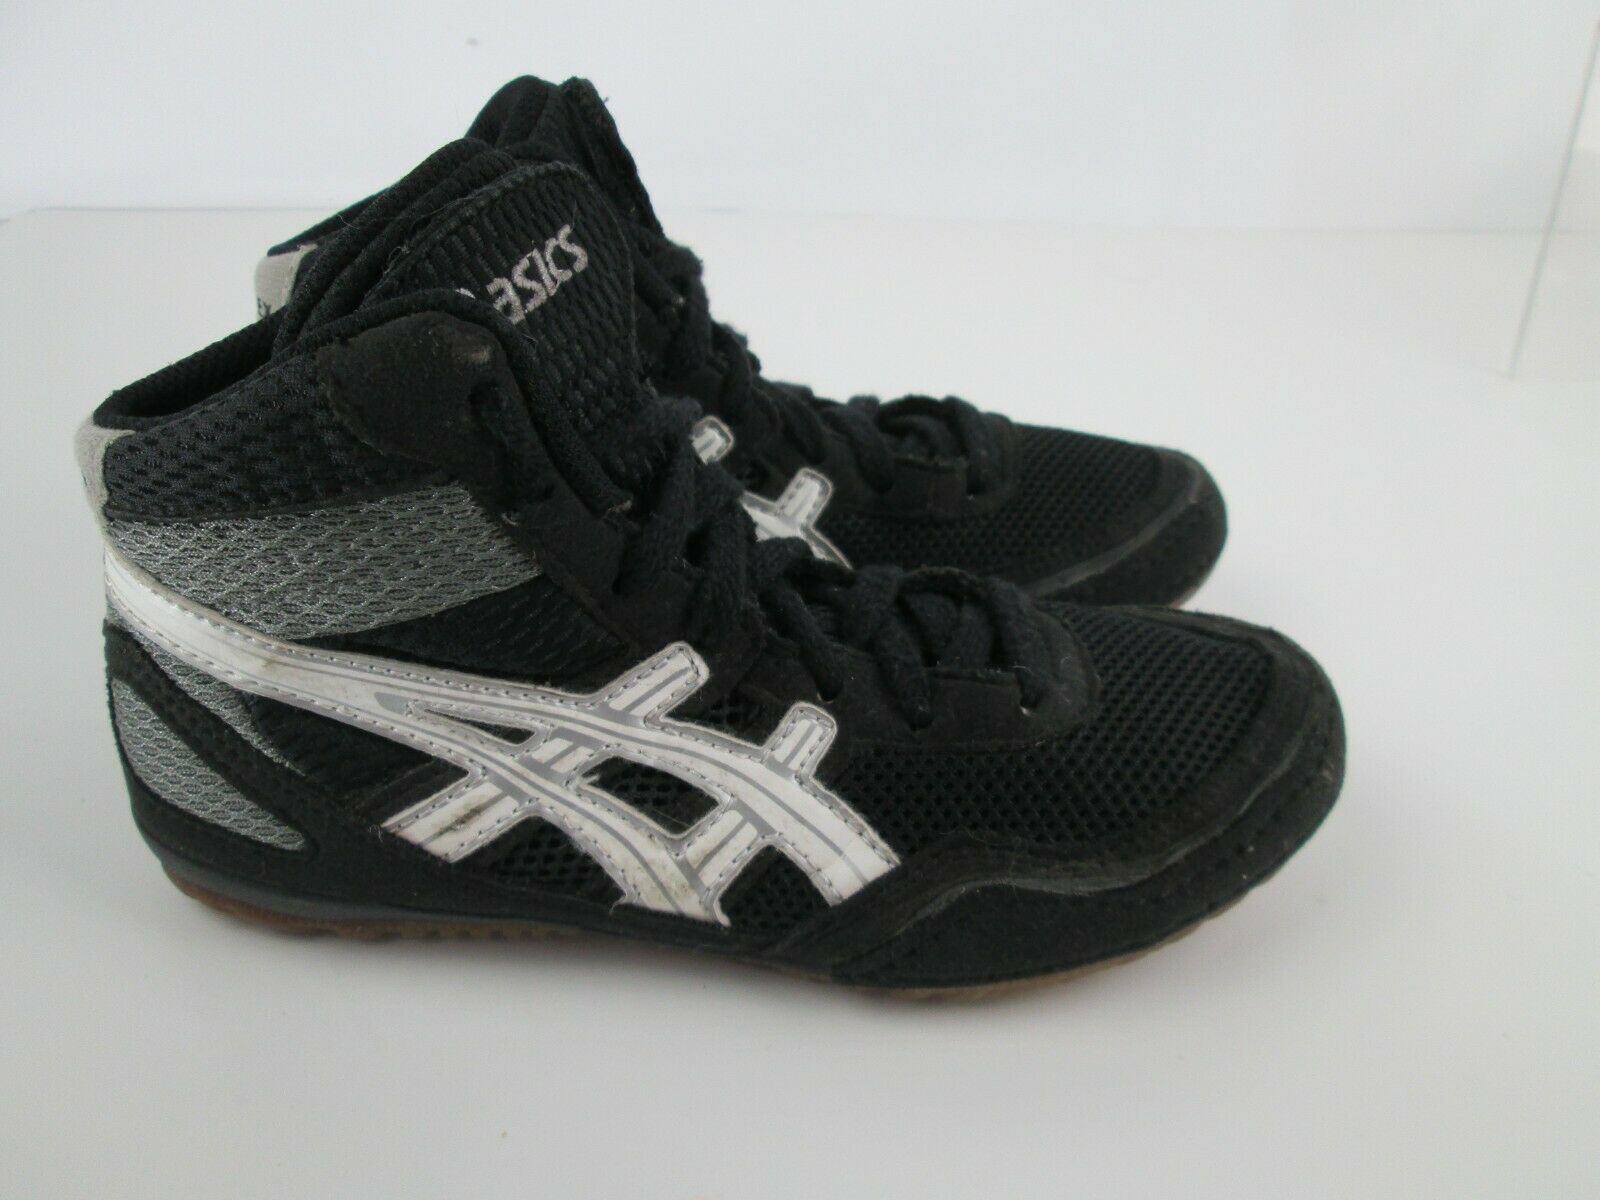 Asics Matflex Wrestling Shoes Youth Size 2 C129N Black Silver White